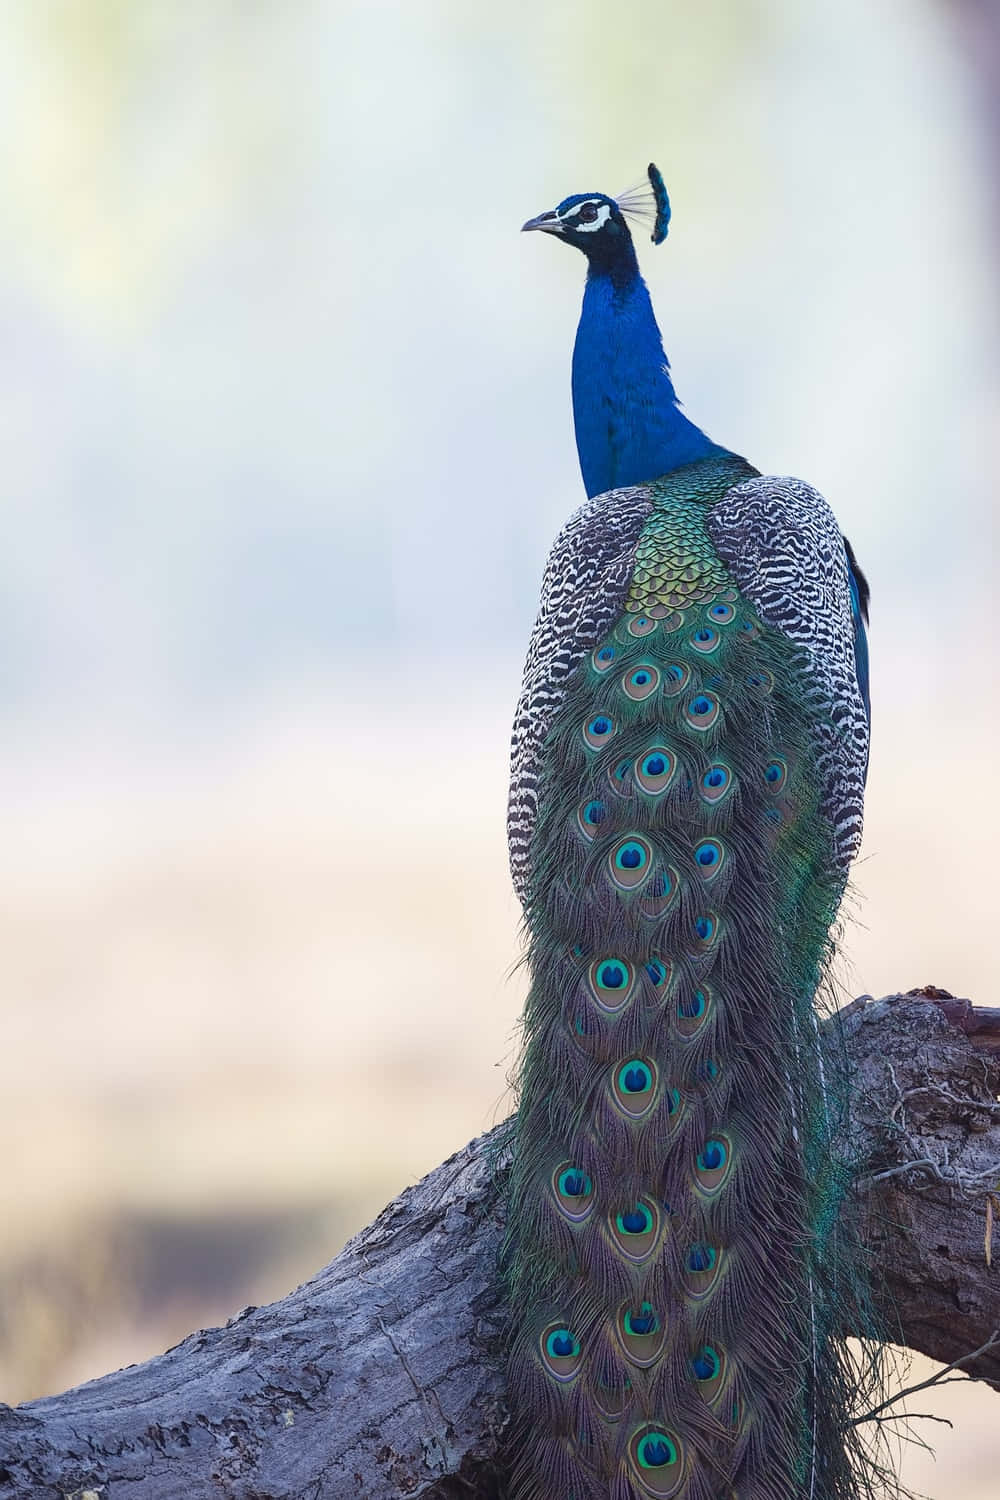 Majestic Royal Peacock Showcasing Vibrant Plumage